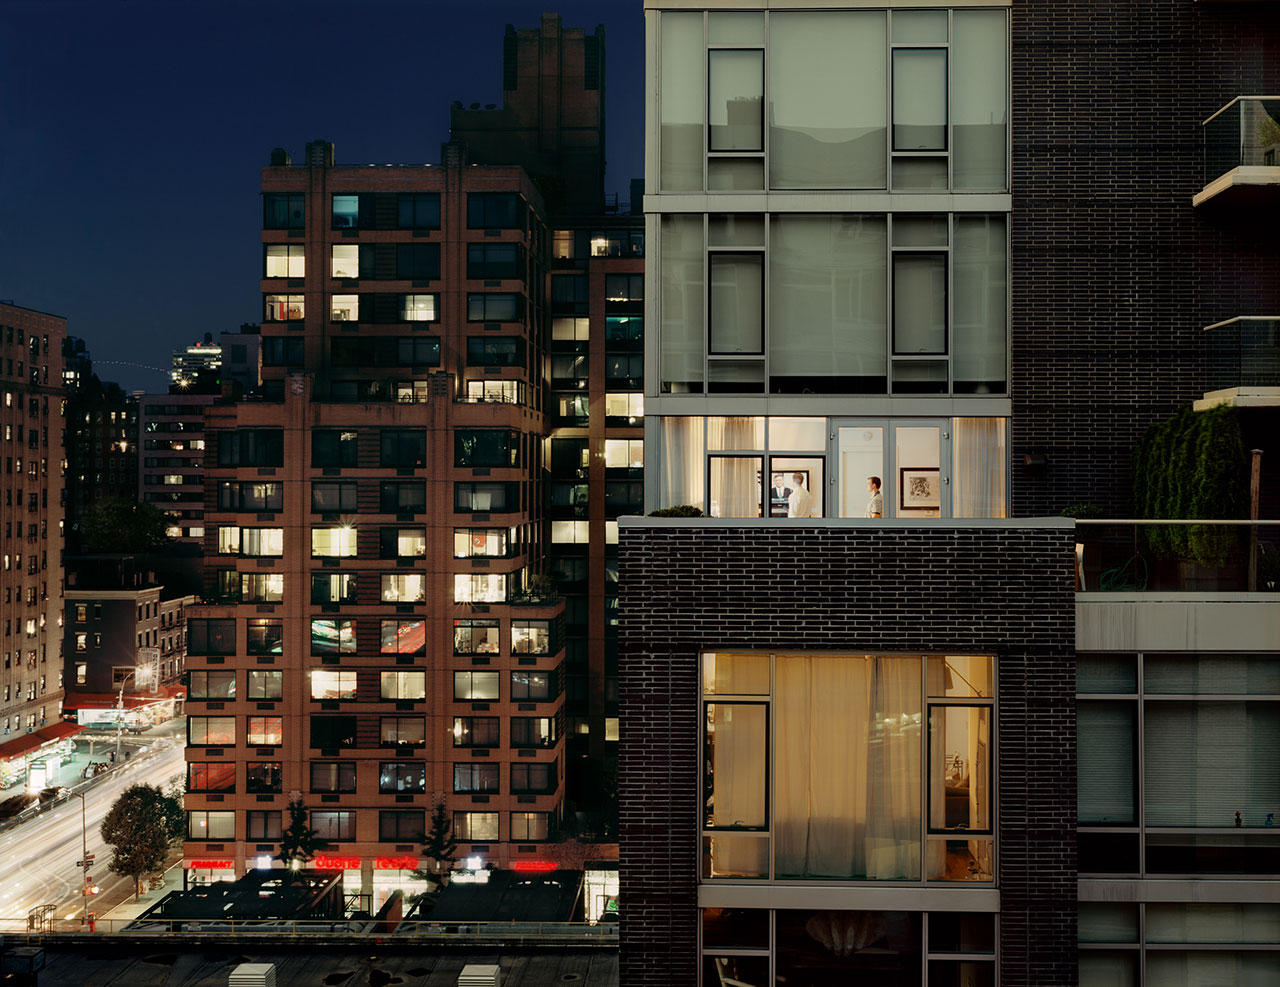 Out my window, New York City. Photo © Gail Albert Halaban.